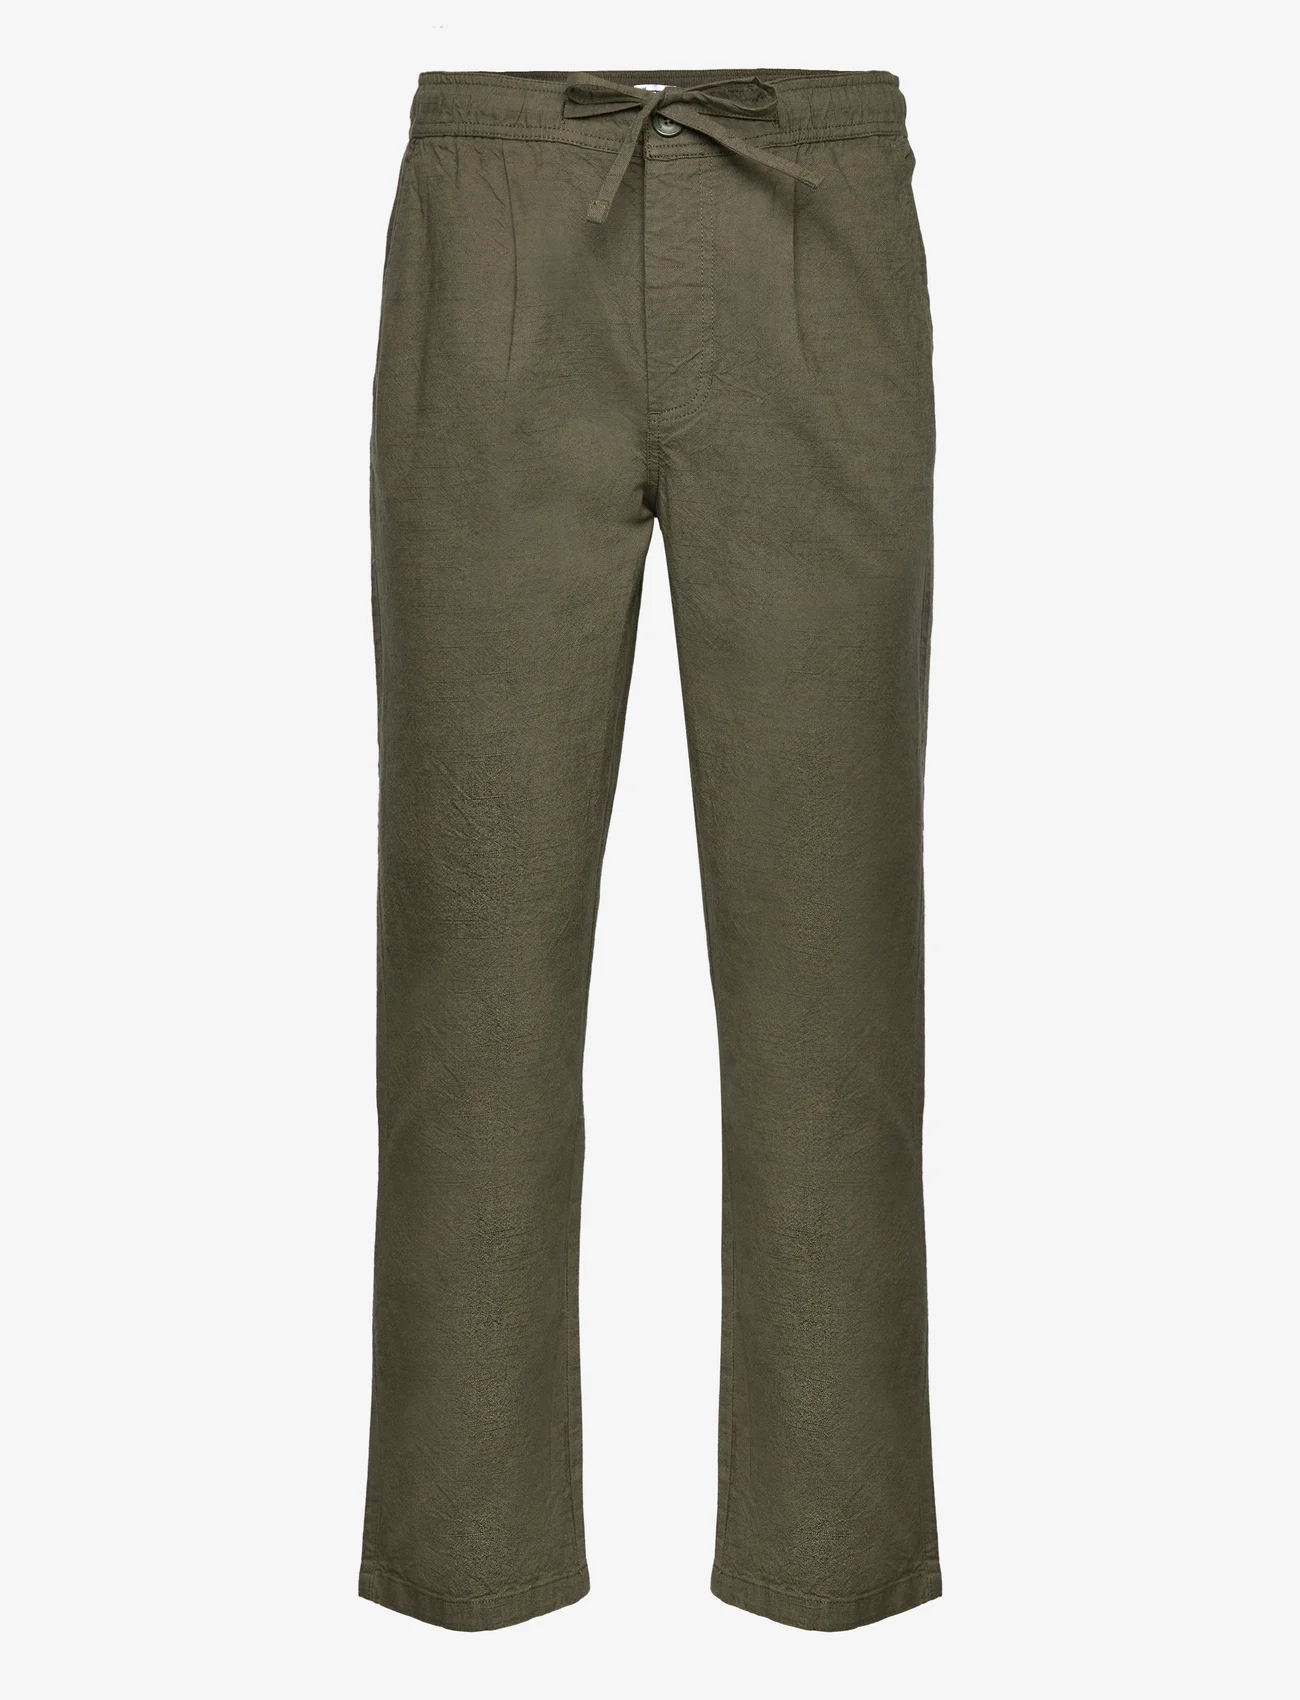 Knowledge Cotton Apparel - FIG loose linen look pants - GOTS/V - casual byxor - burned olive - 0